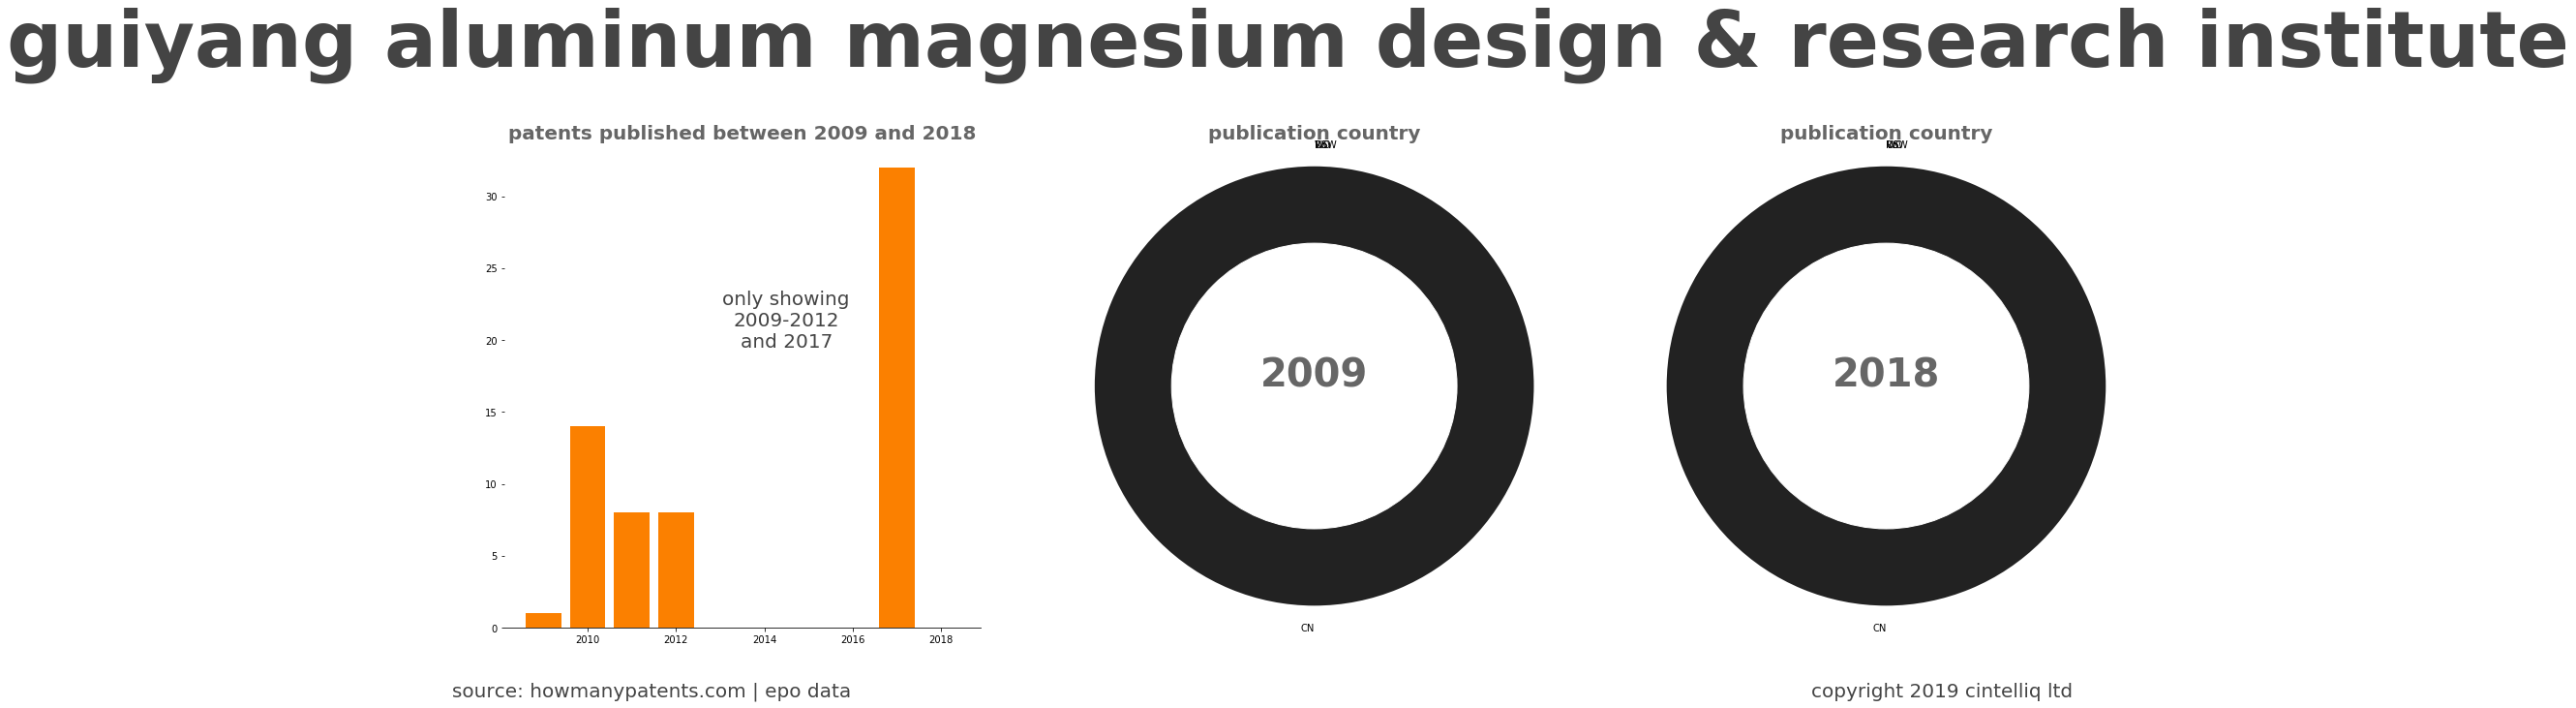 summary of patents for Guiyang Aluminum Magnesium Design & Research Institute